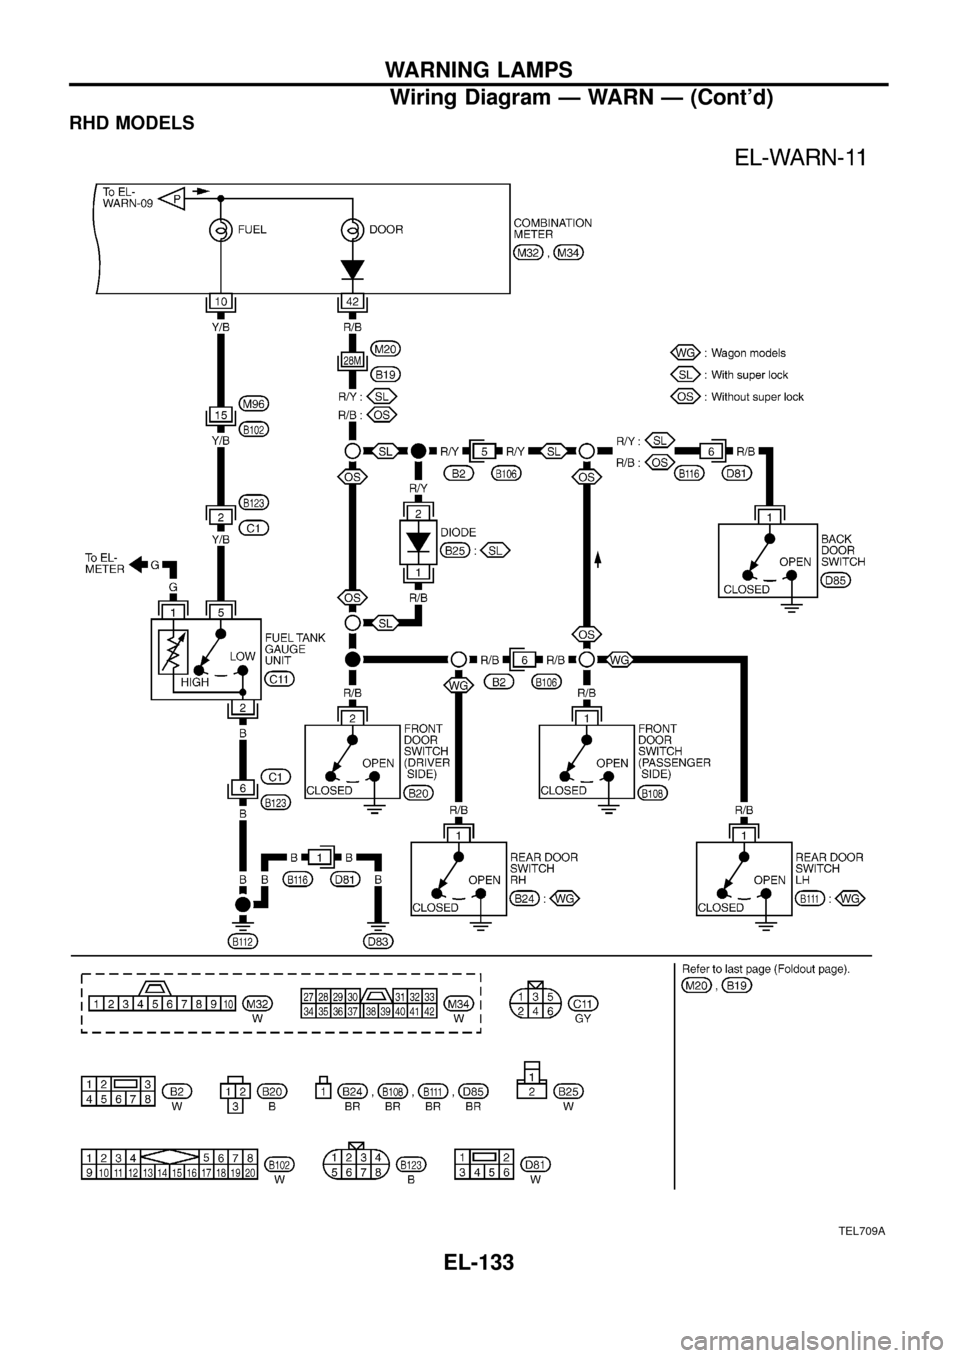 NISSAN PATROL 1998 Y61 / 5.G Electrical System Owners Manual RHD MODELS
TEL709A
WARNING LAMPS
Wiring Diagram Ð WARN Ð (Contd)
EL-133 